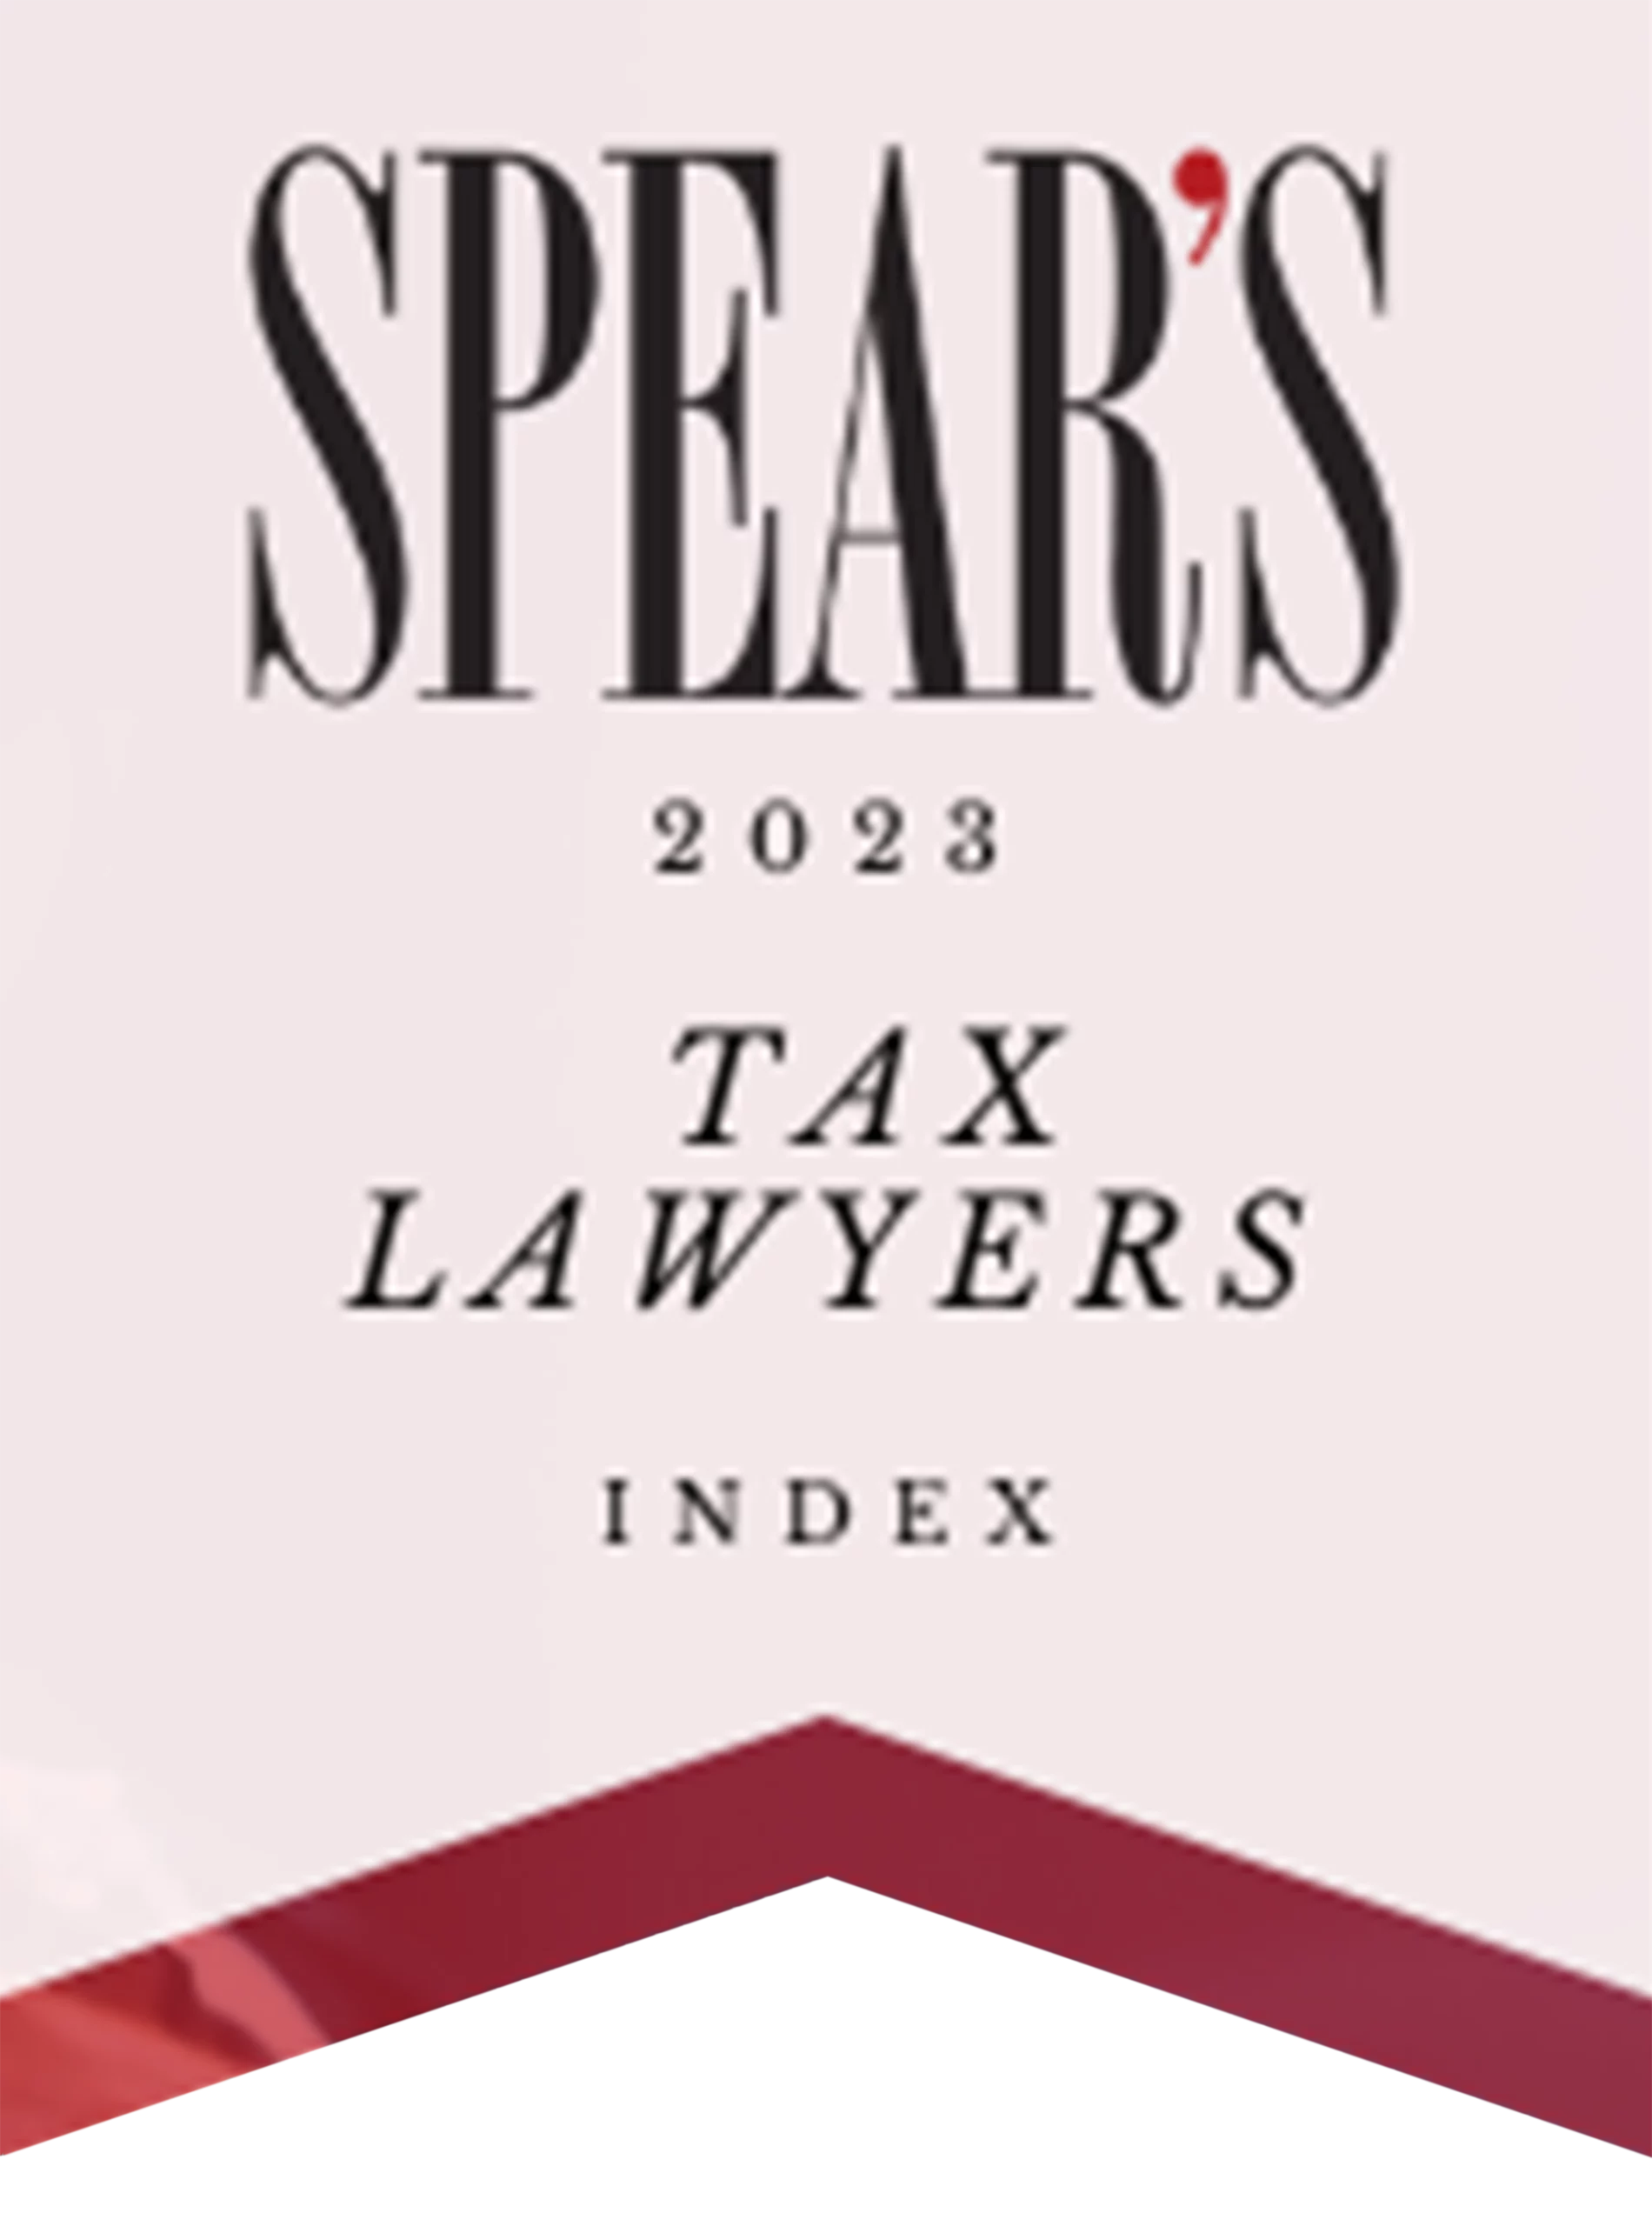 Spear's Index - Tax Lawyers 2023